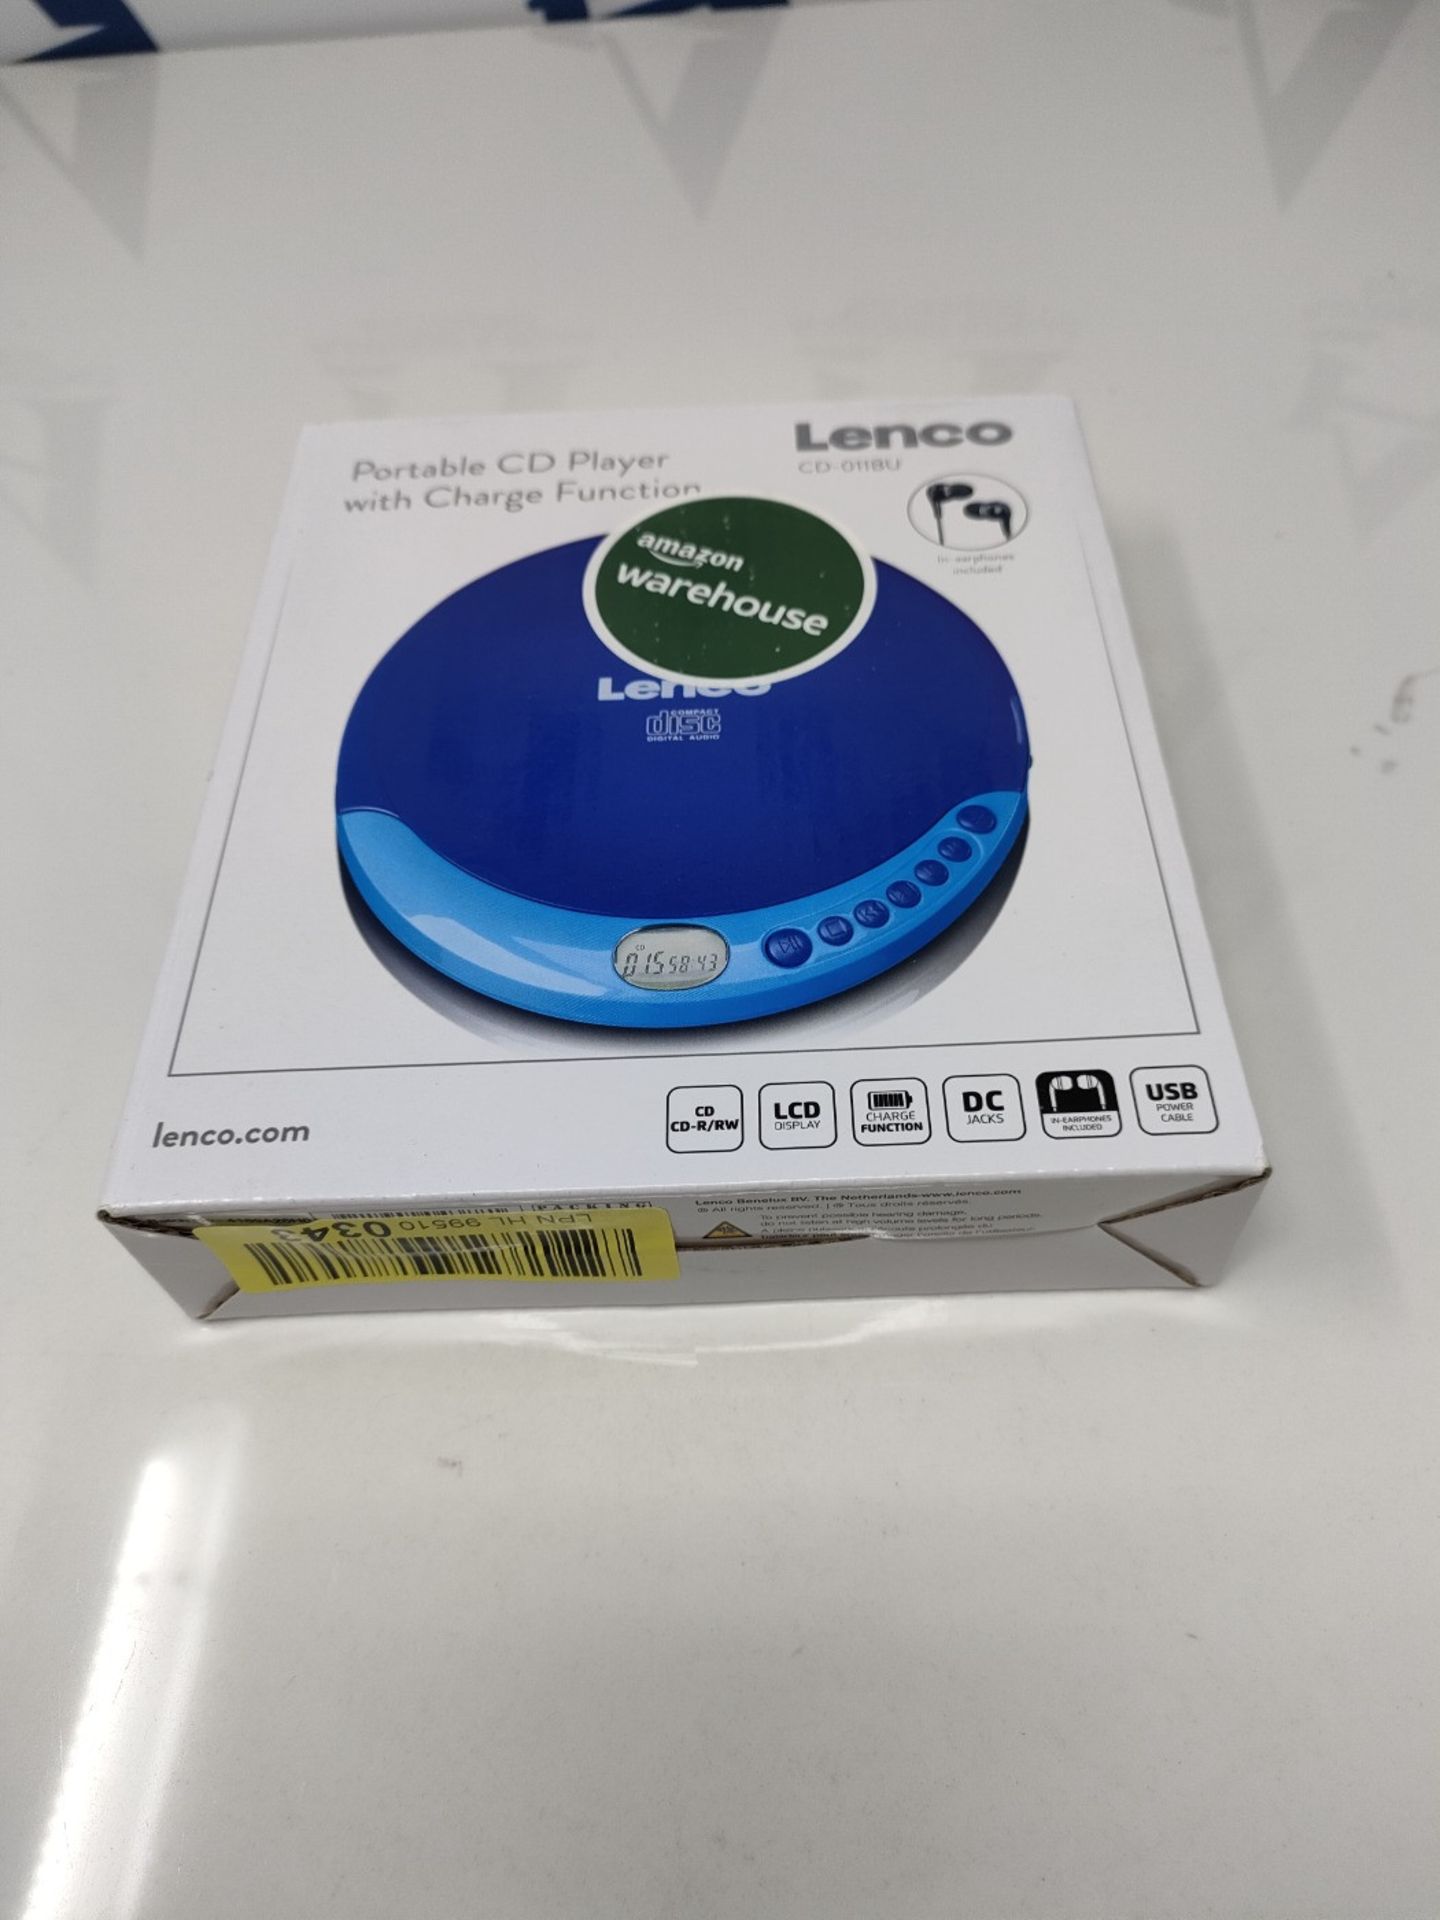 Lenco CD-011 Portable CD Player/Walkman/Diskman/CD Walkman, blue - Image 2 of 3